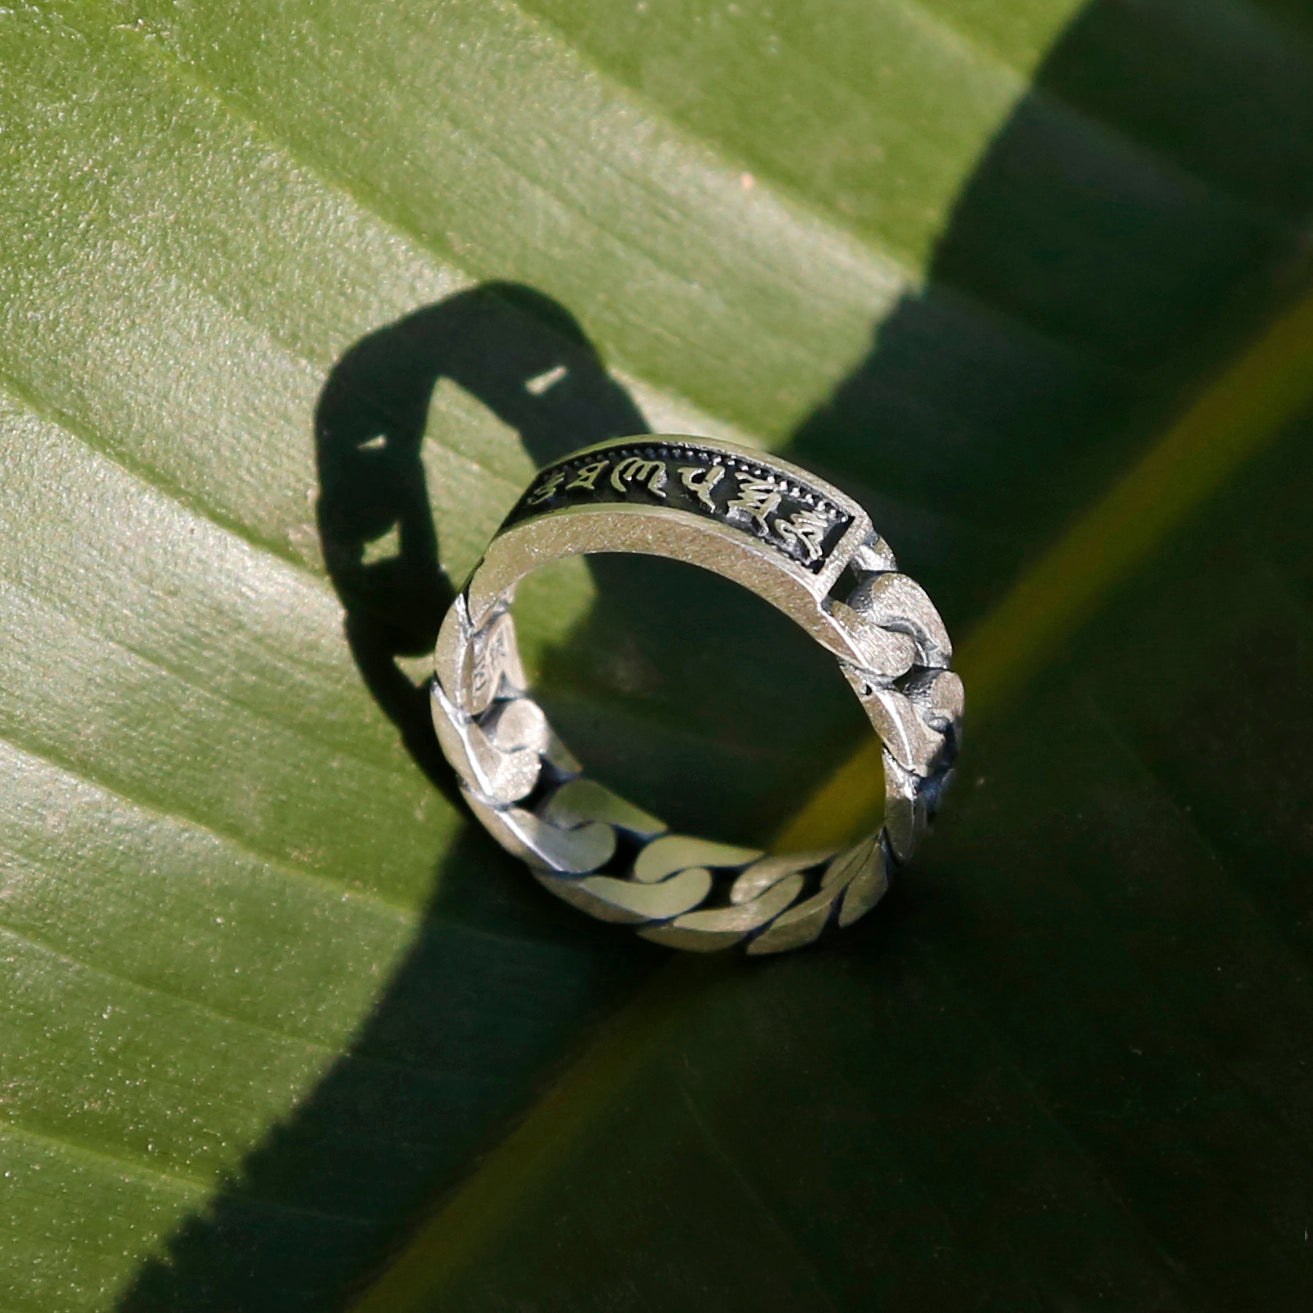 Chain-style Tibetan Prayers Symbols Buddhism Sterling Silver Ring, Buddhist Mens Ring - ZentralDesigns